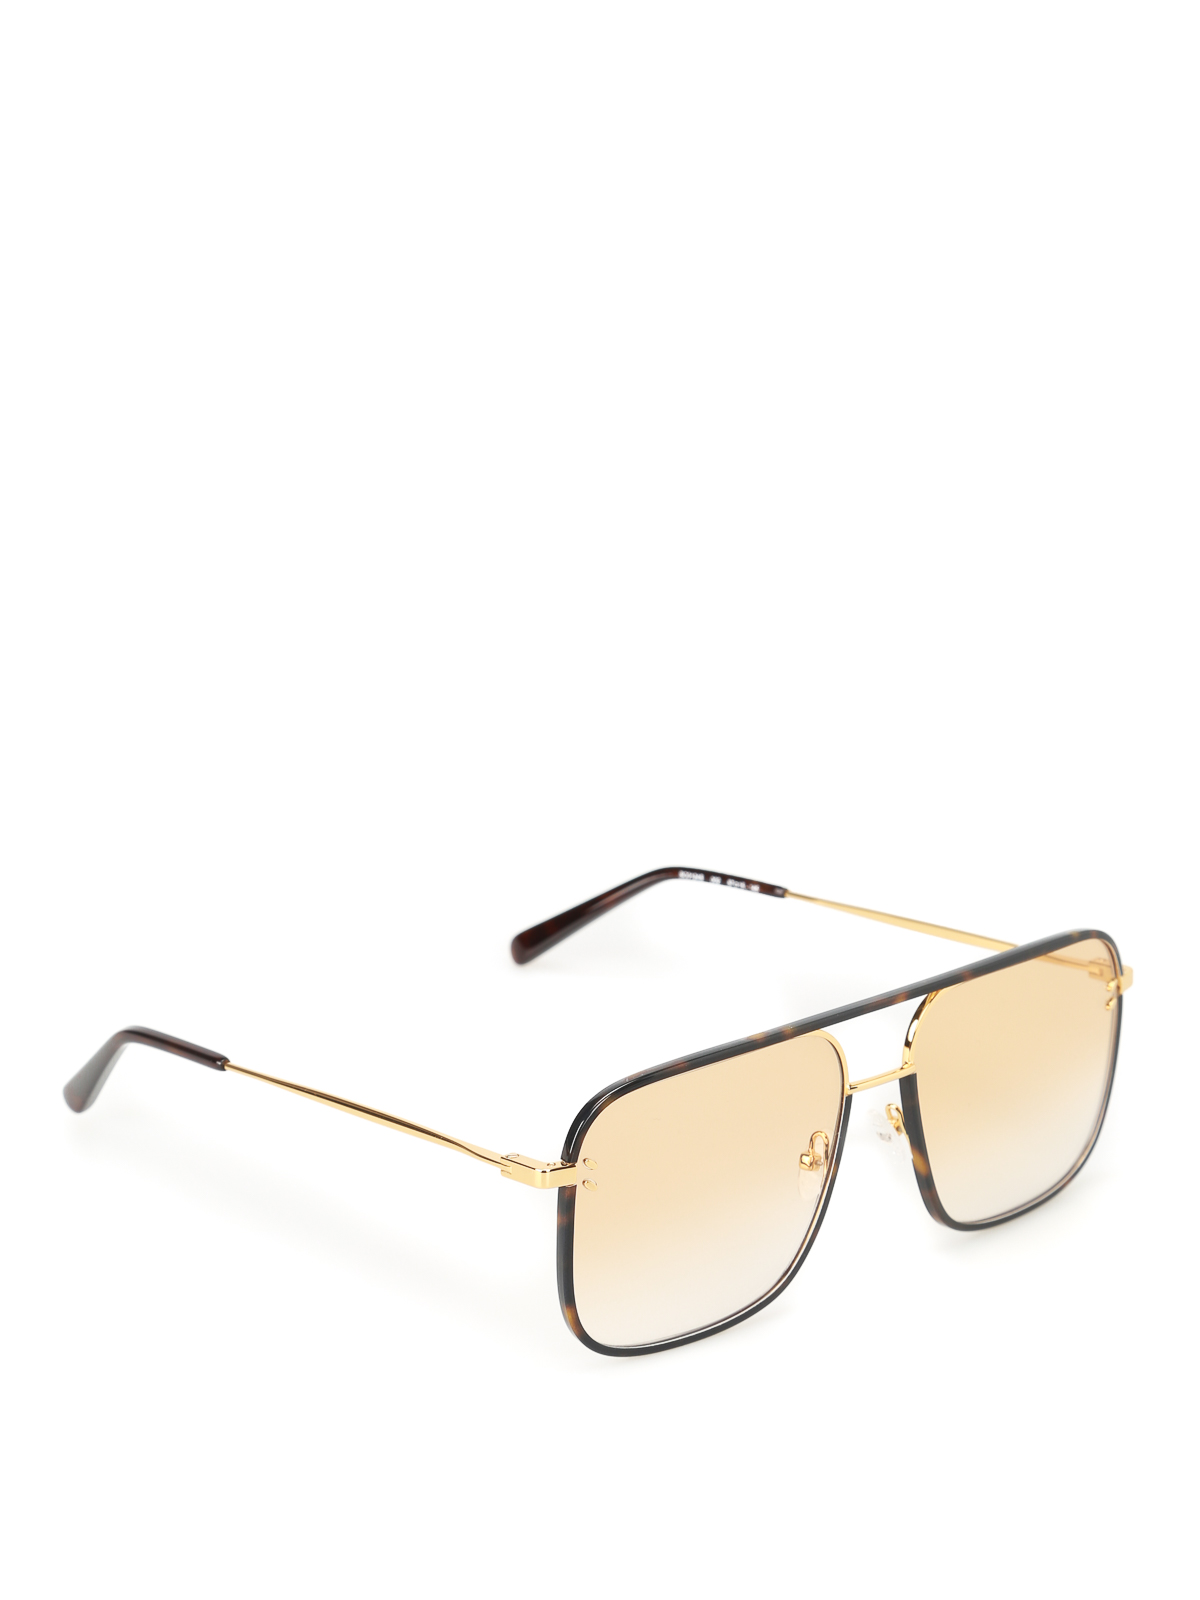 Sunglasses Stella Mccartney - Shaded orange lenses sunglasses - SC0124S002